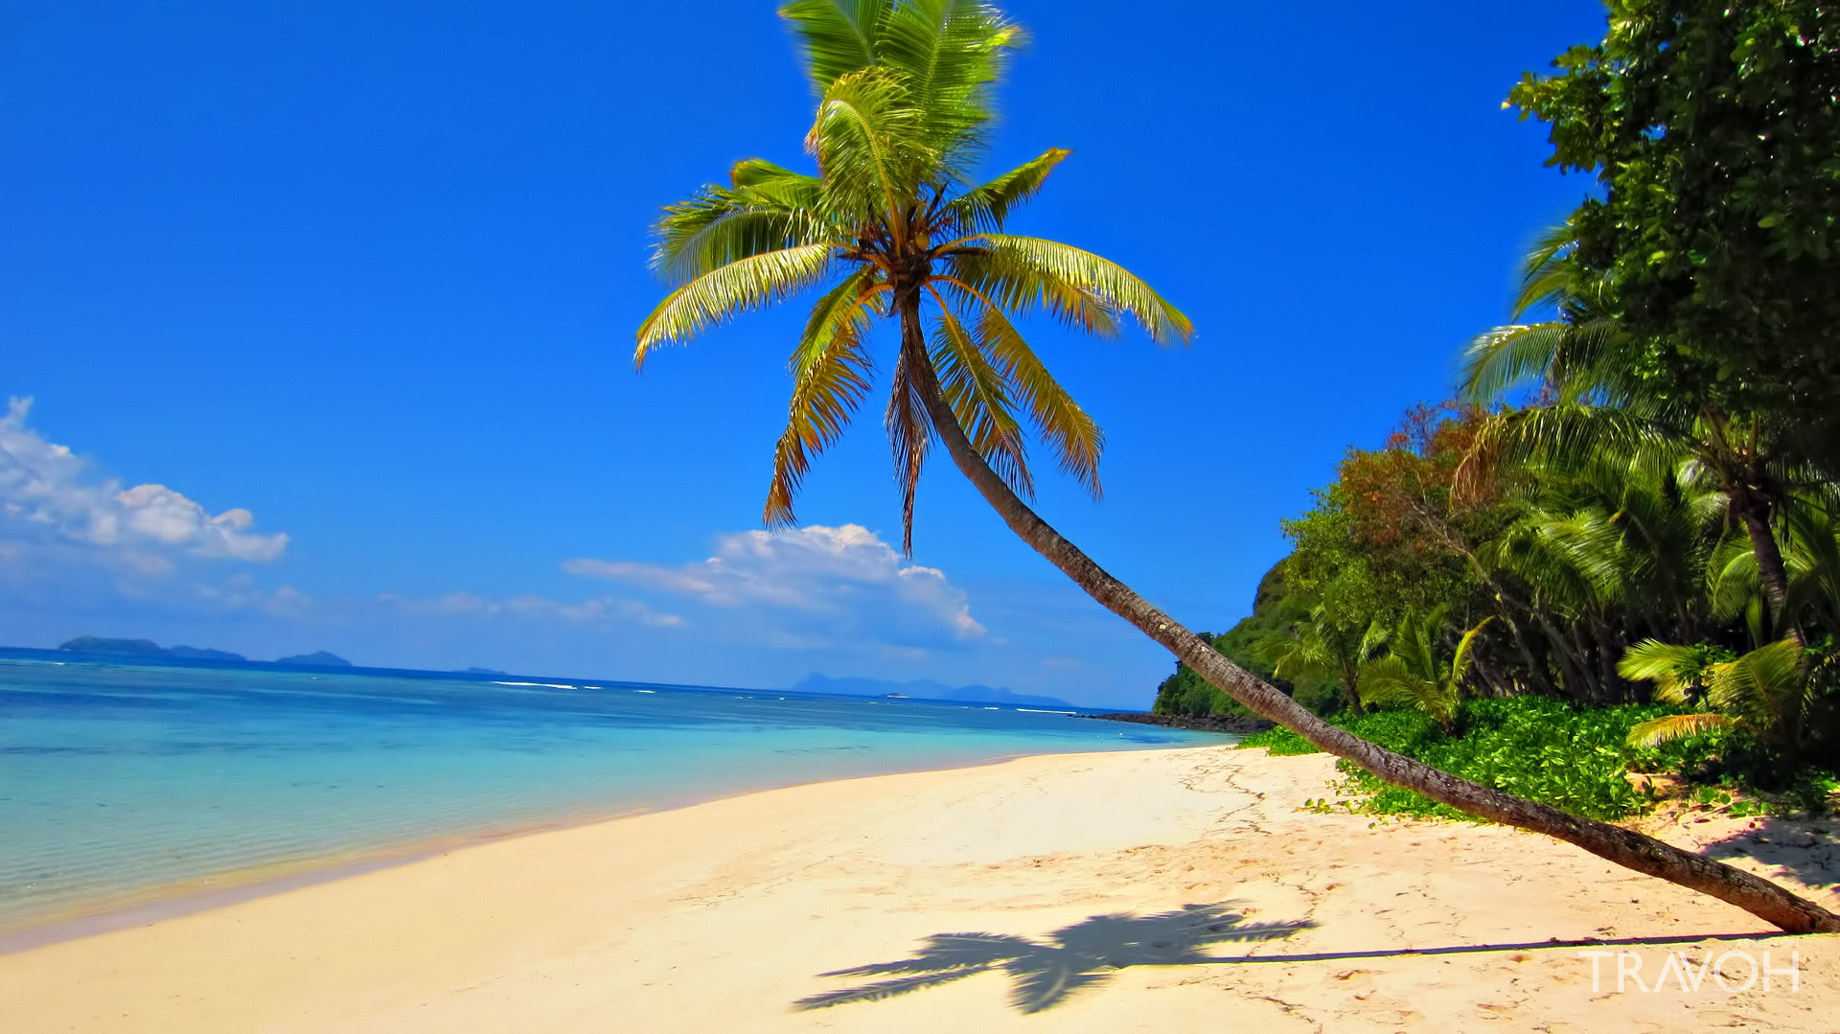 Tokoriki Island Resort – Exploring 10 of the Top Beach Locations on the Islands of Fiji